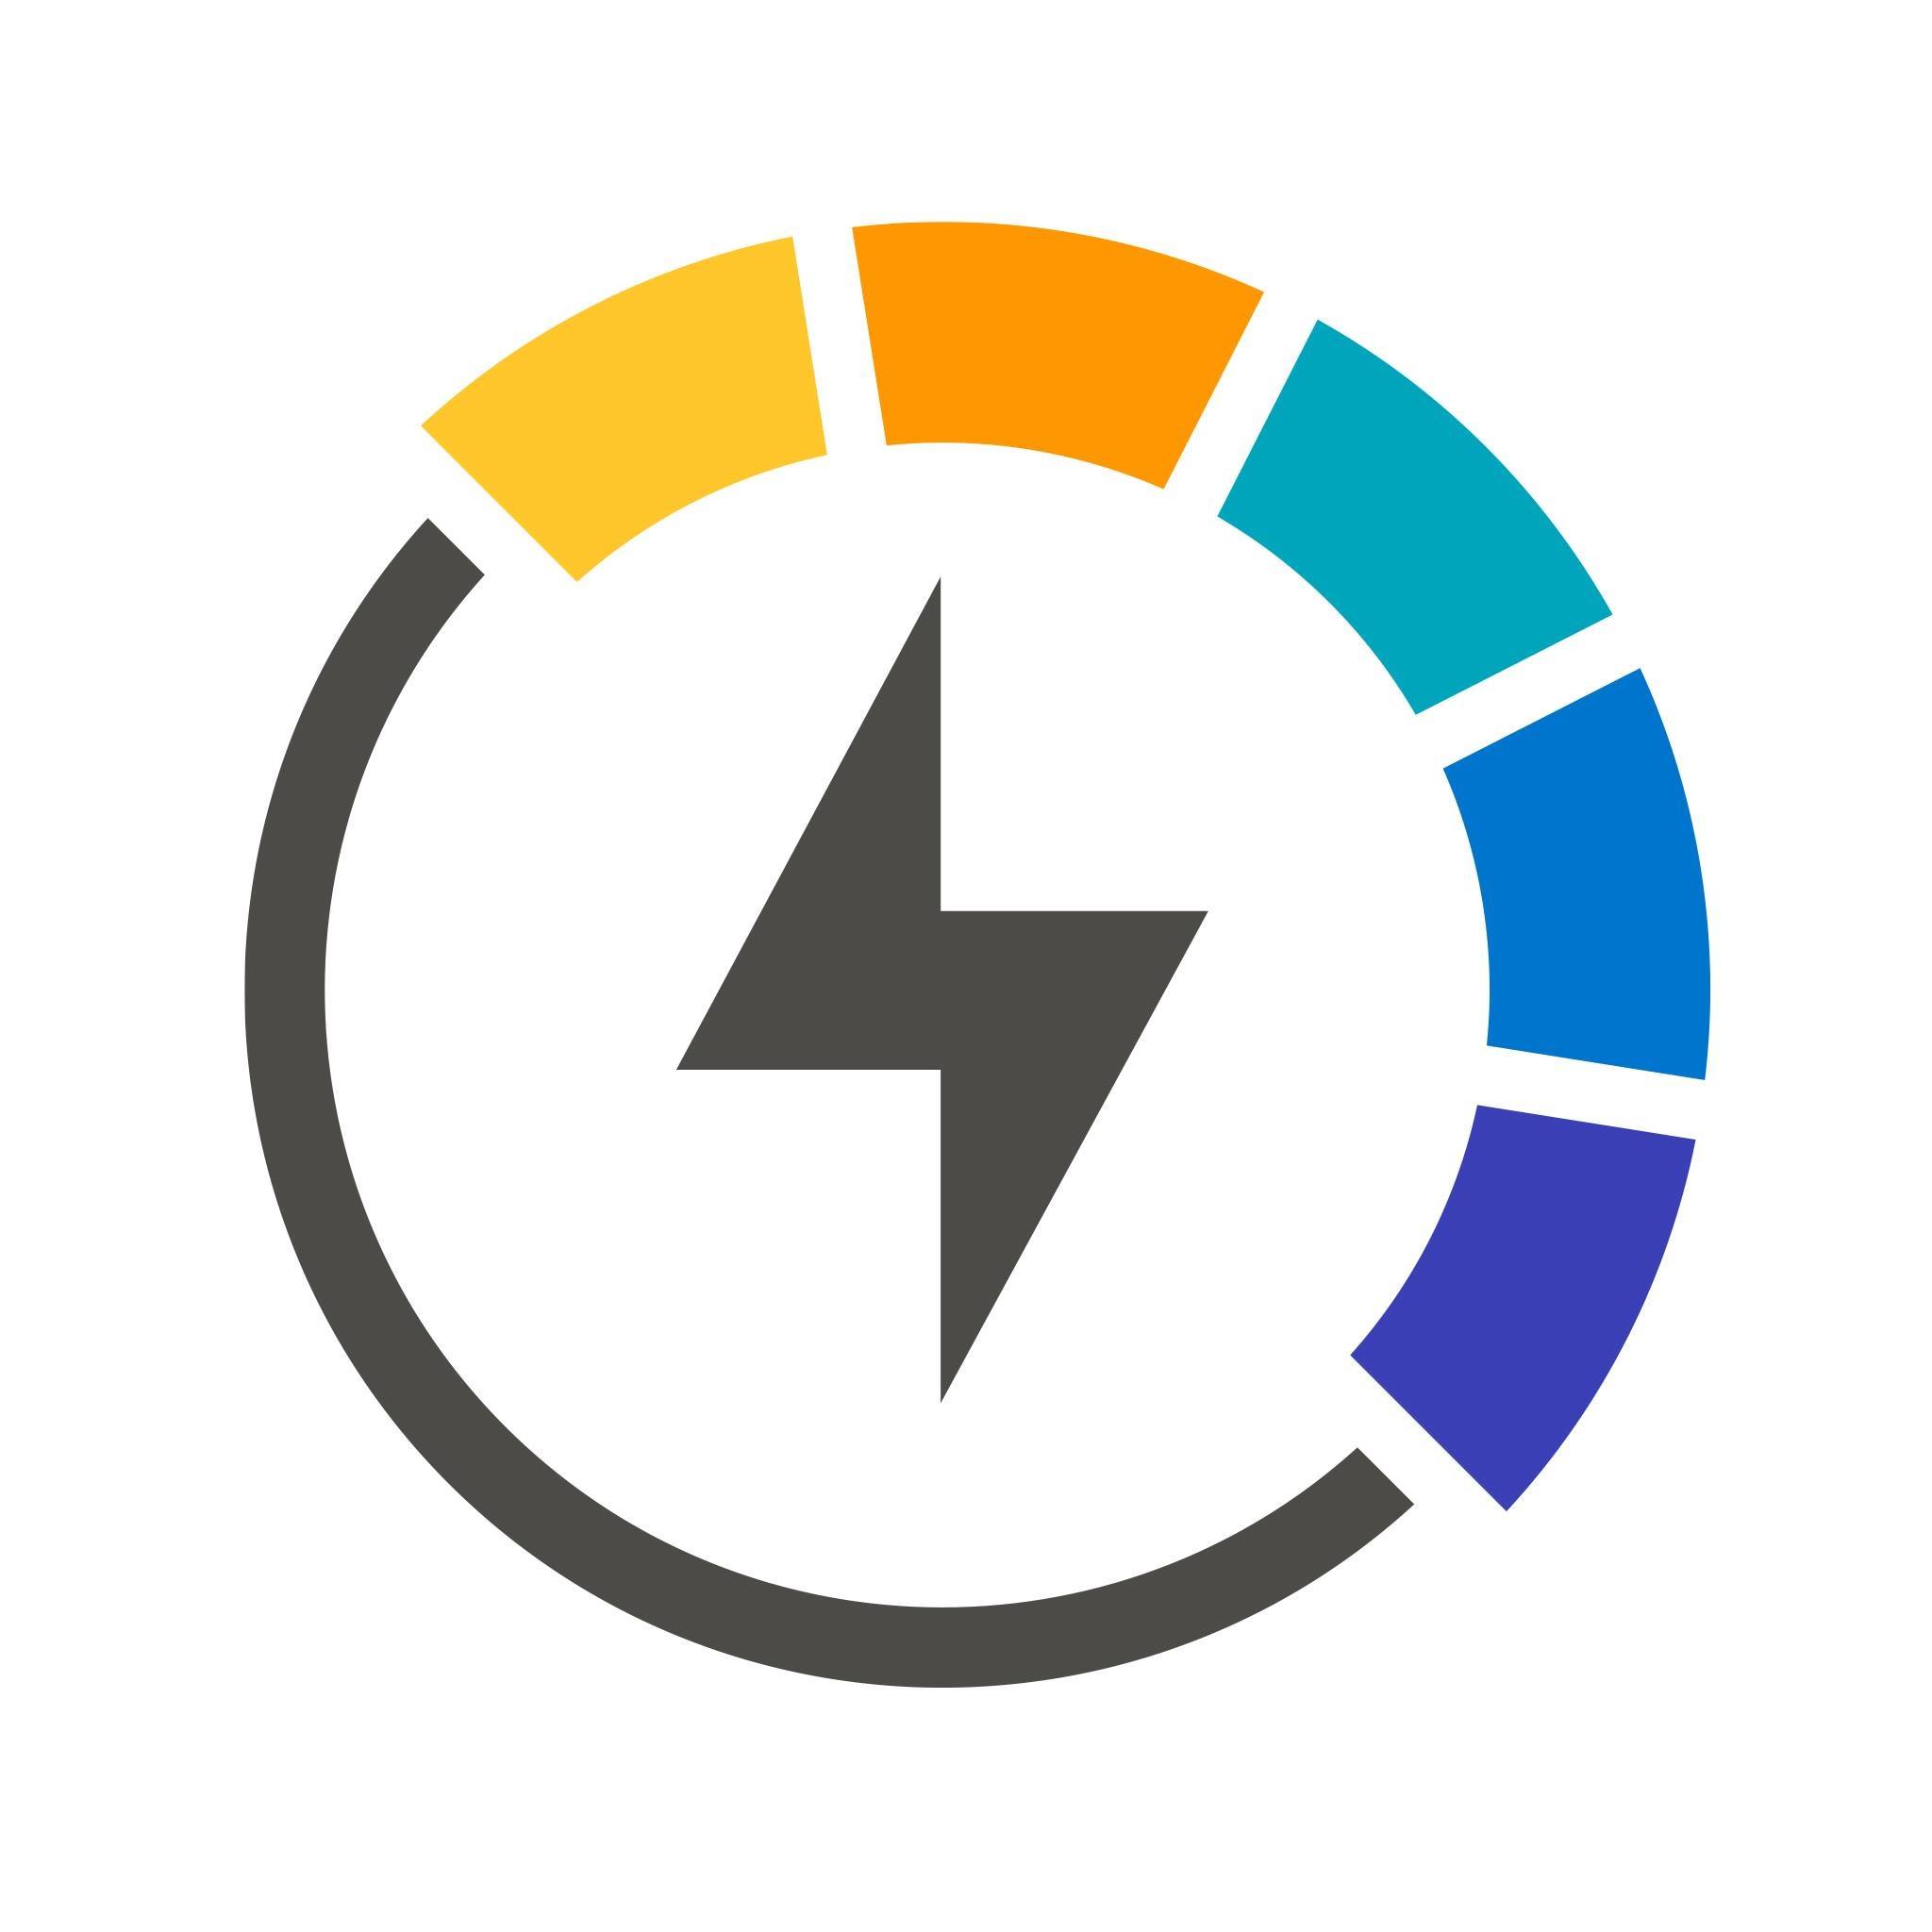 San Diego Community Power Logo